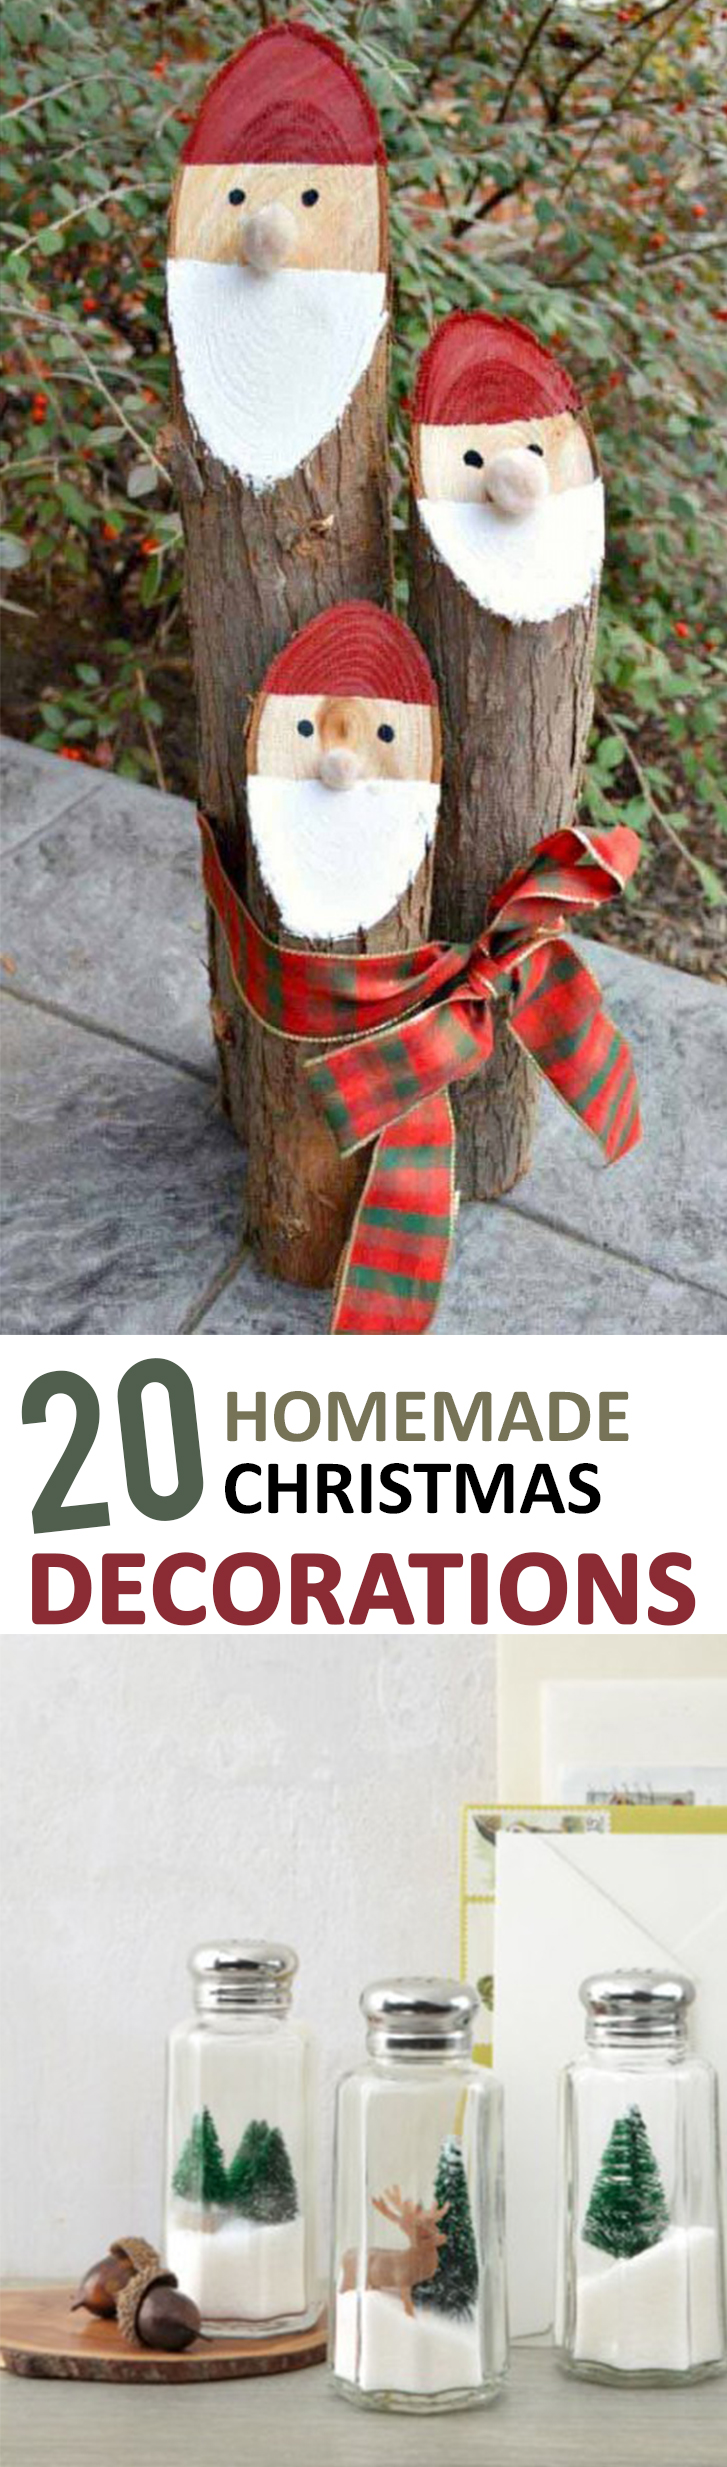 20 Homemade Christmas Decorations